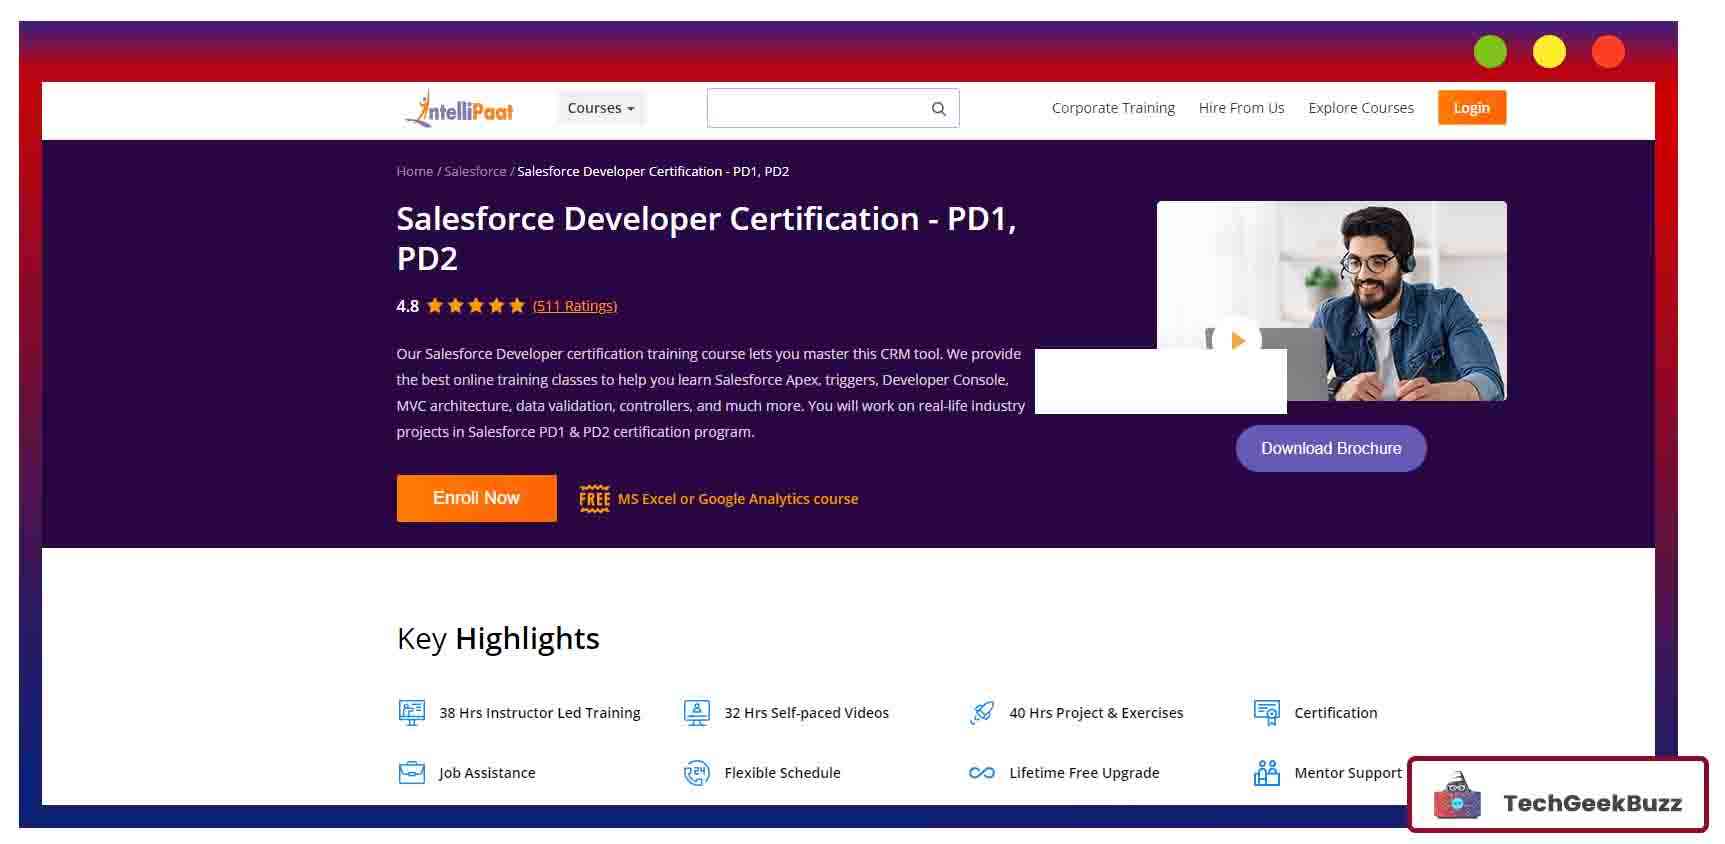 Salesforce Developer Certification - PD1, PD2